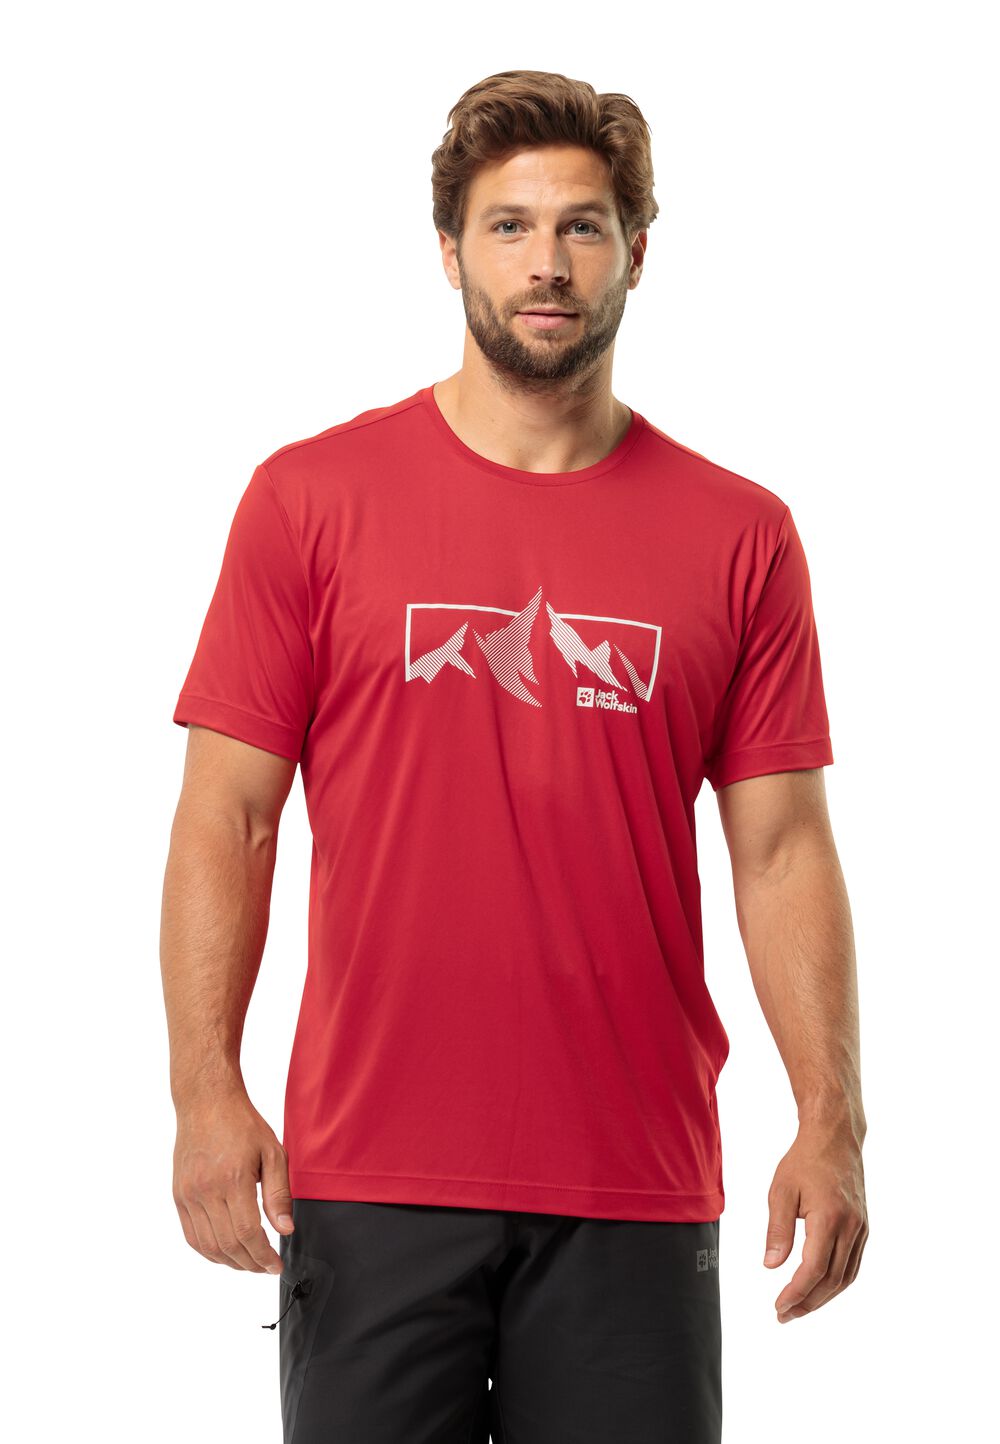 Jack Wolfskin Peak Graphic T-Shirt Men Functioneel shirt Heren XXL rood red glow